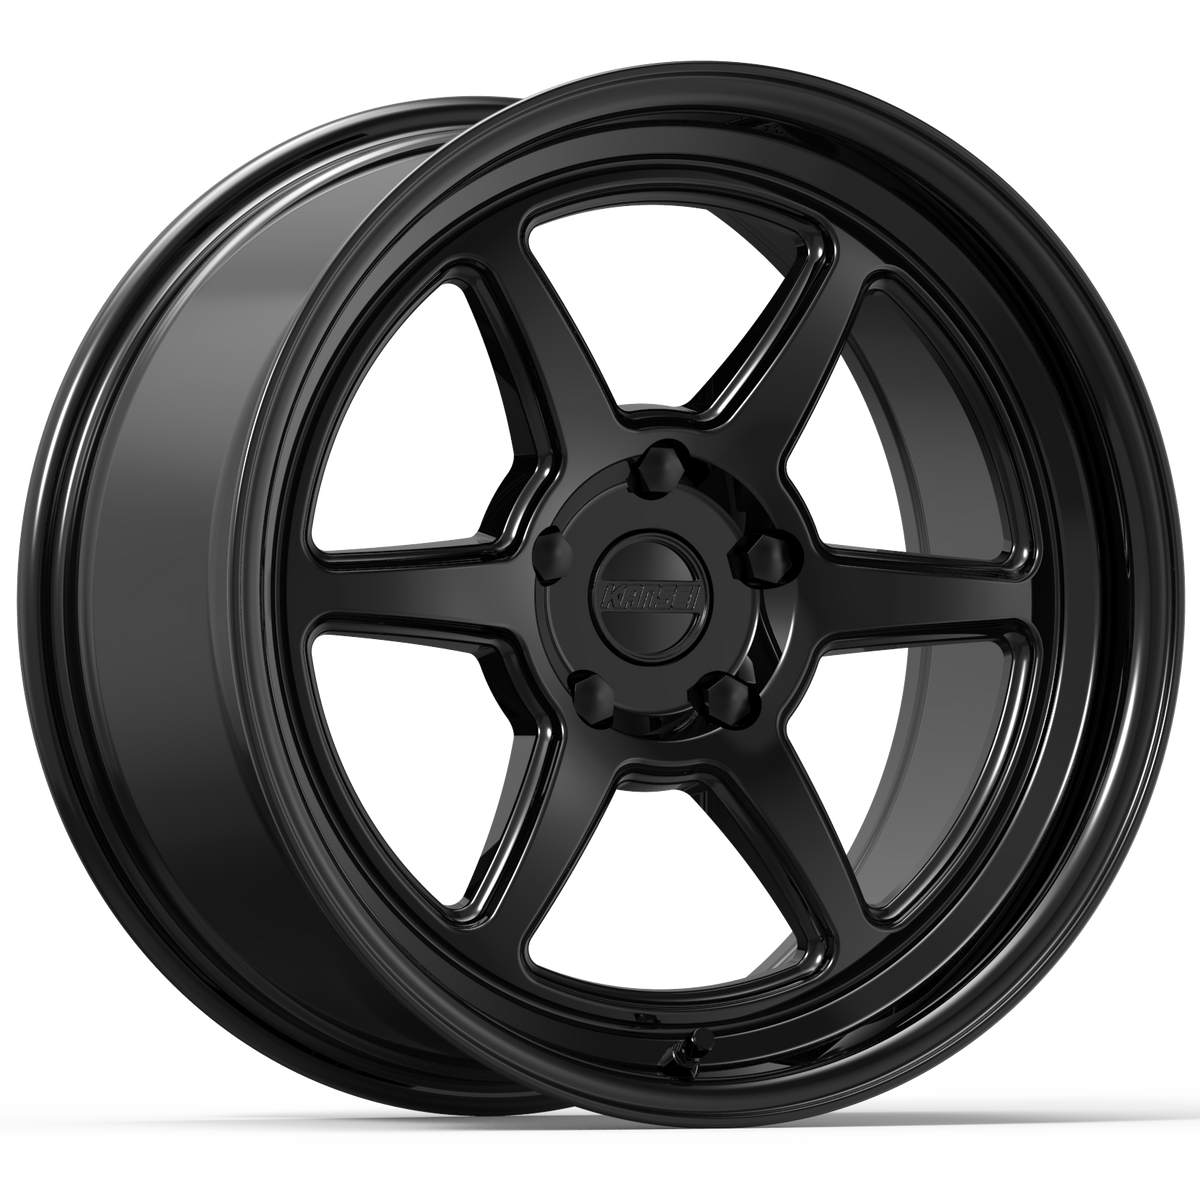 K14B ROKU Wheel, Size: 17" x 8.50", Bolt Pattern: 6 x 135 mm, Backspace: 4.75" [Finish: Gloss Black]